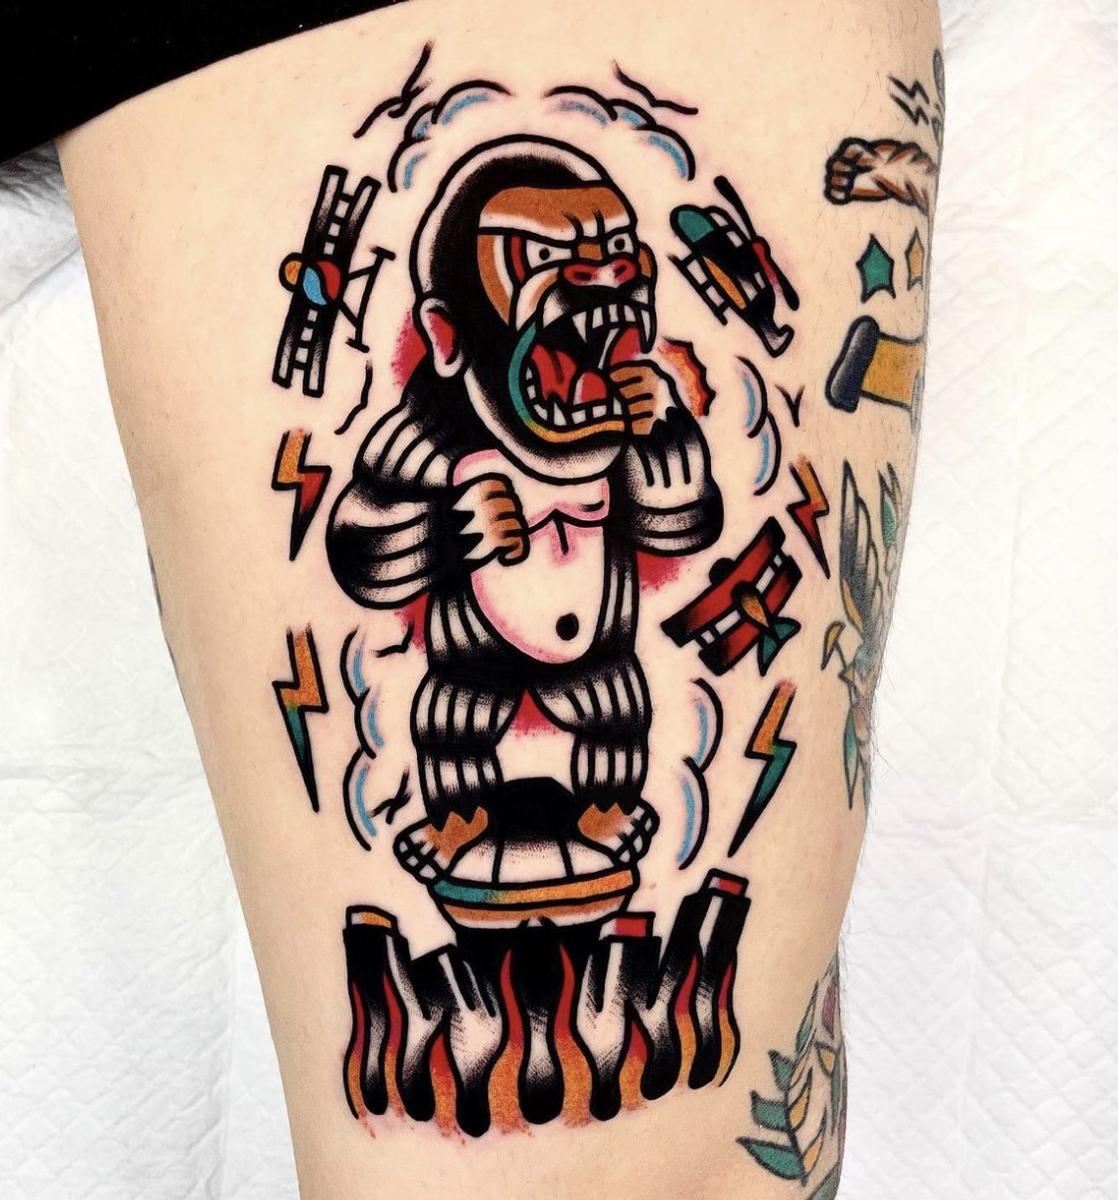 NeoTraditional King Kong Tattoo by Joozy Tats